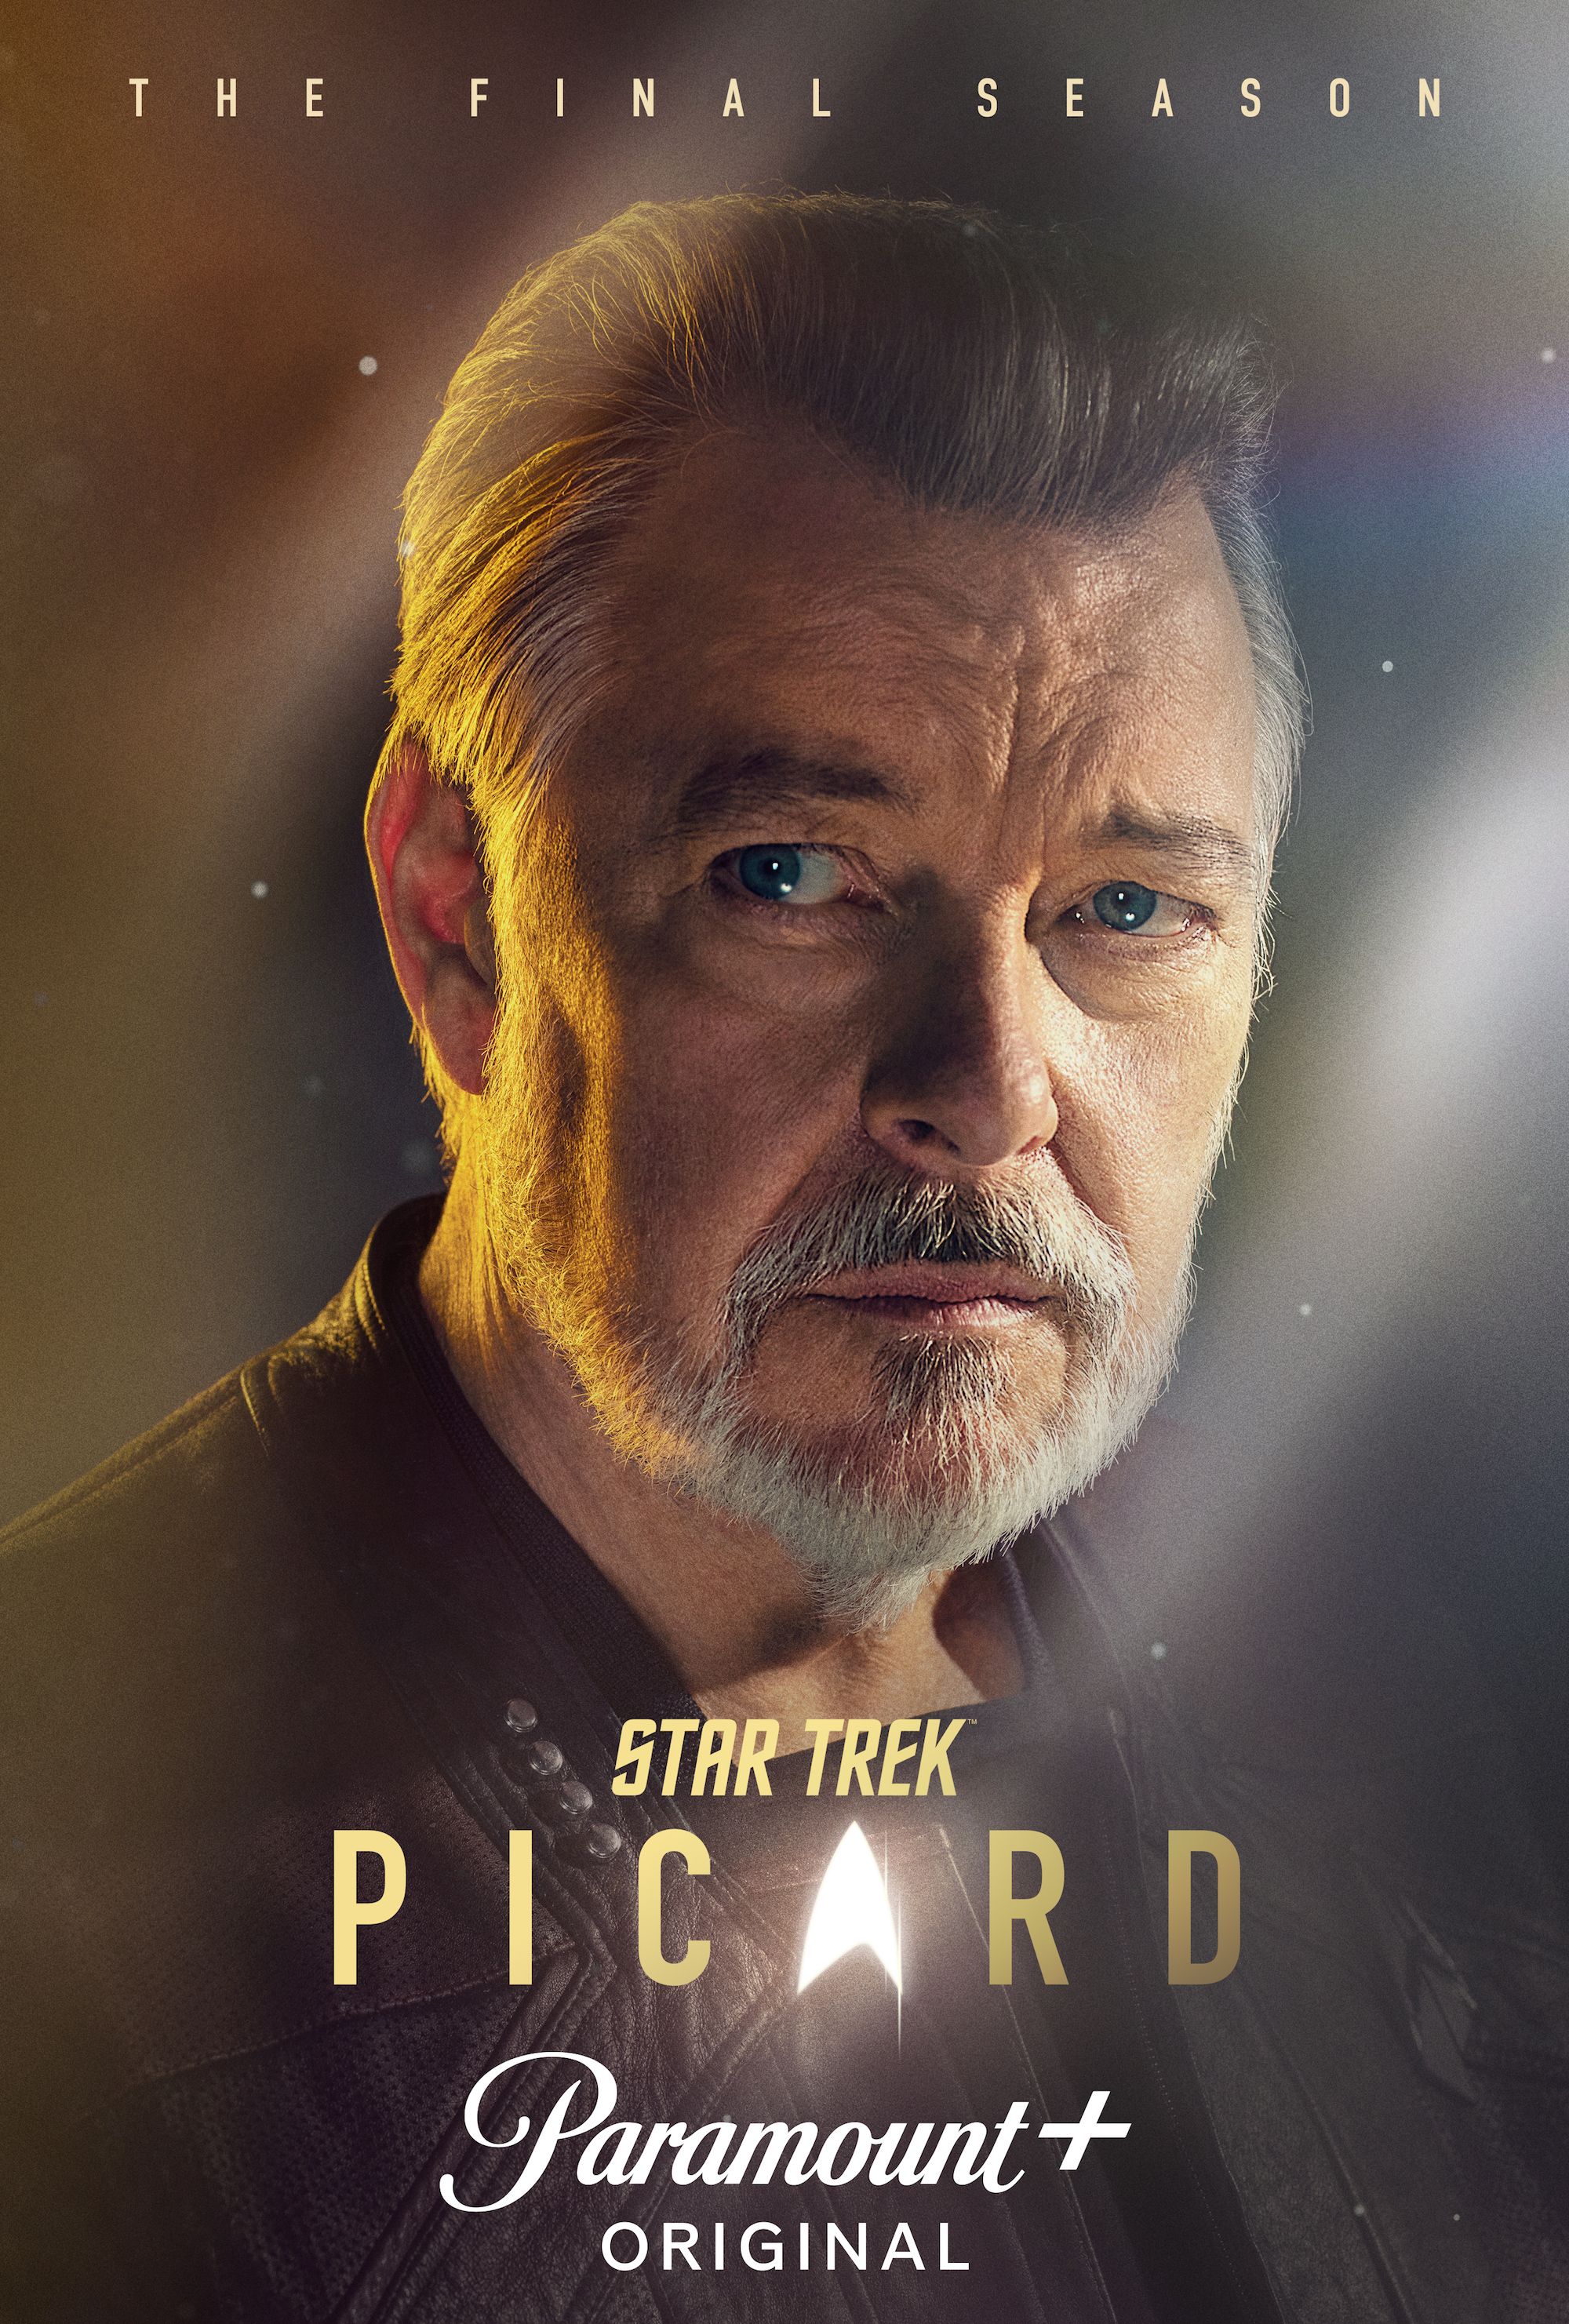 Jonathan Frakes as Riker in Star Trek Picard Season 3